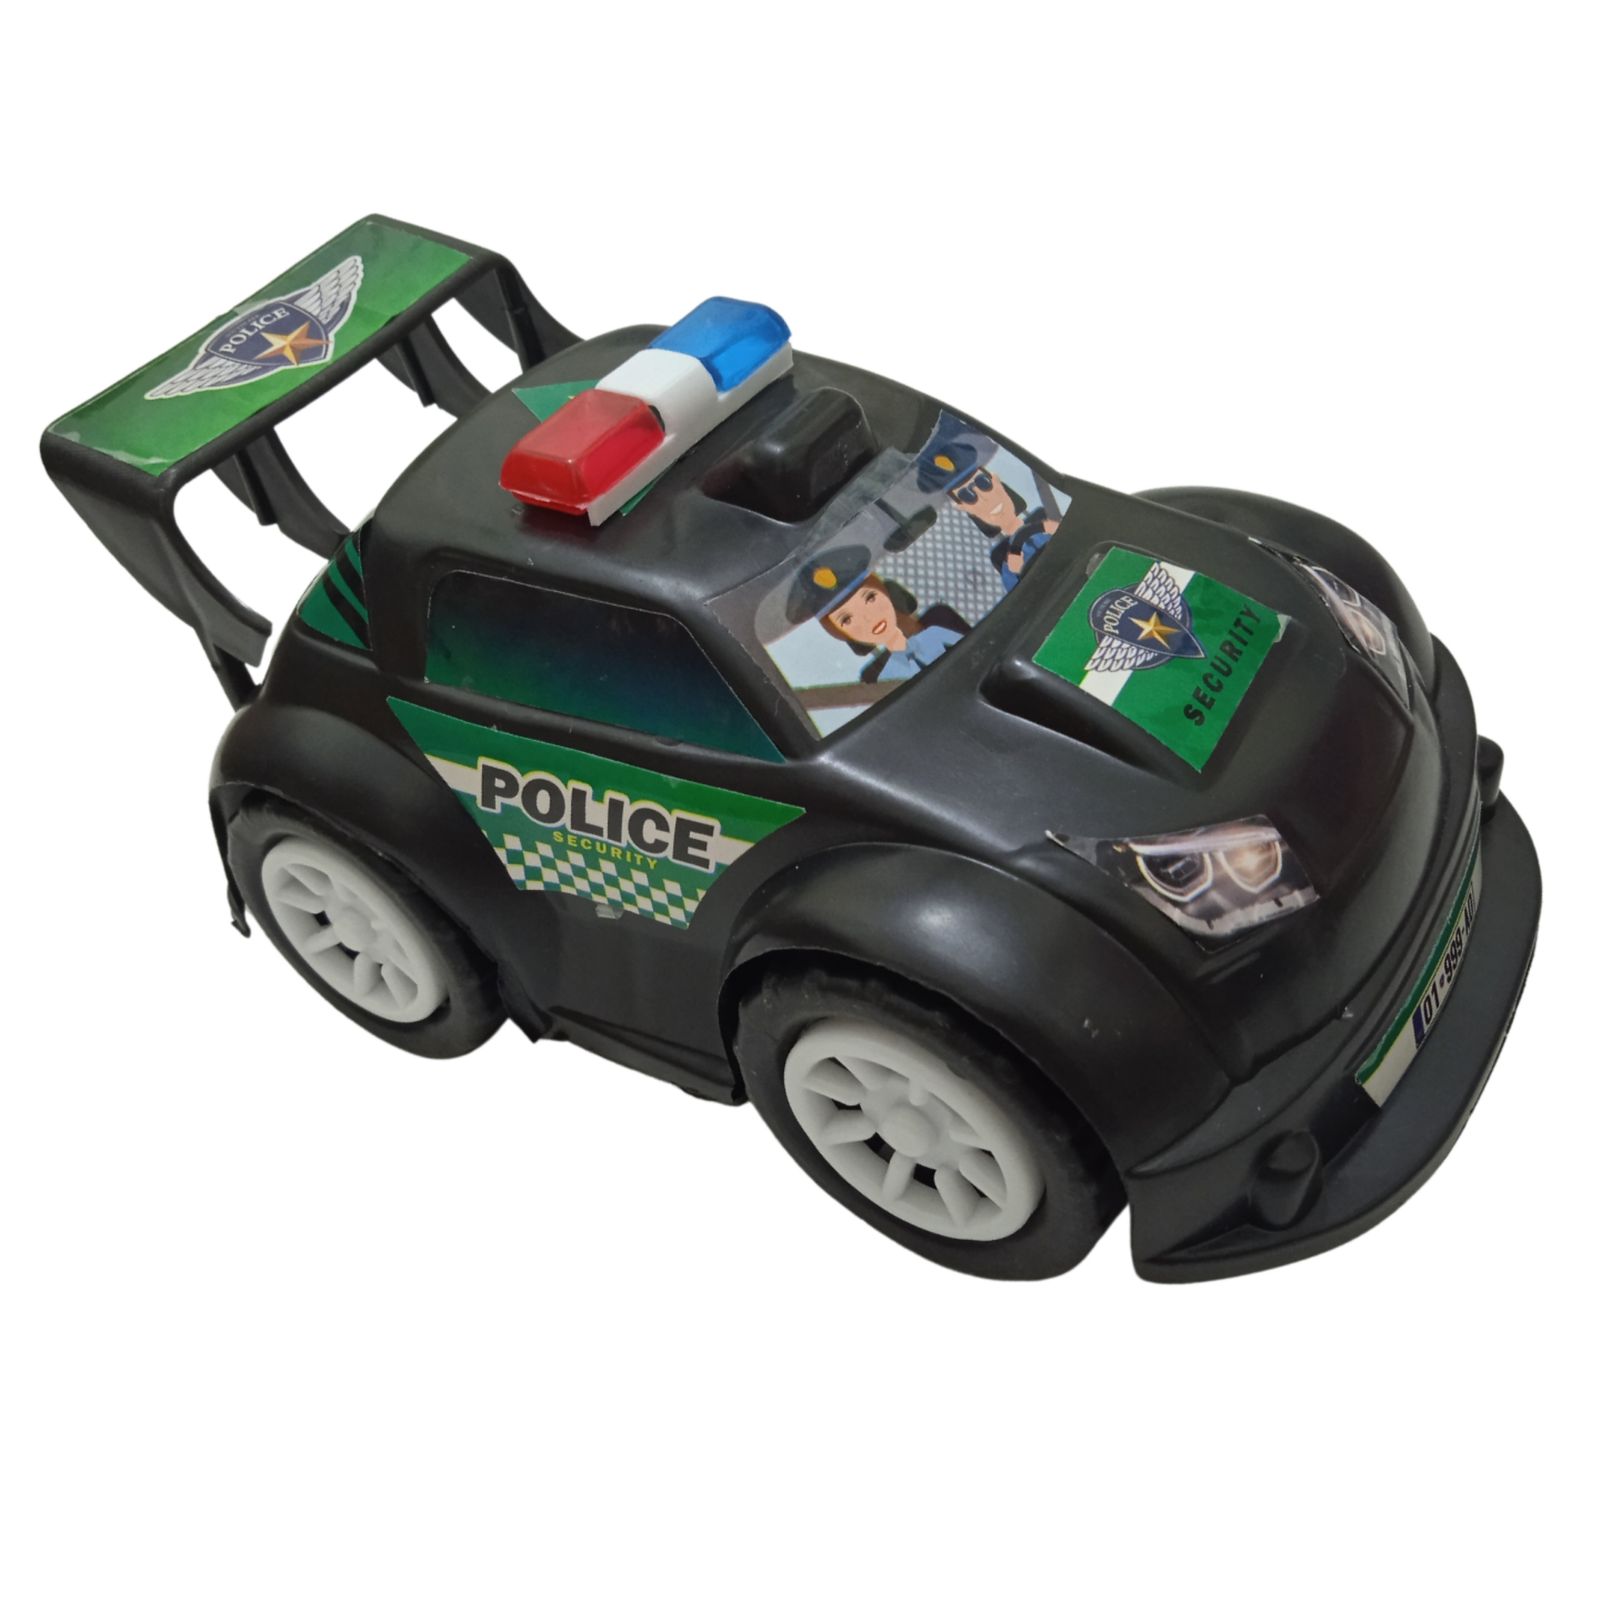 ماشین اسباب بازی مدل پلیس کد 3 -  - 1